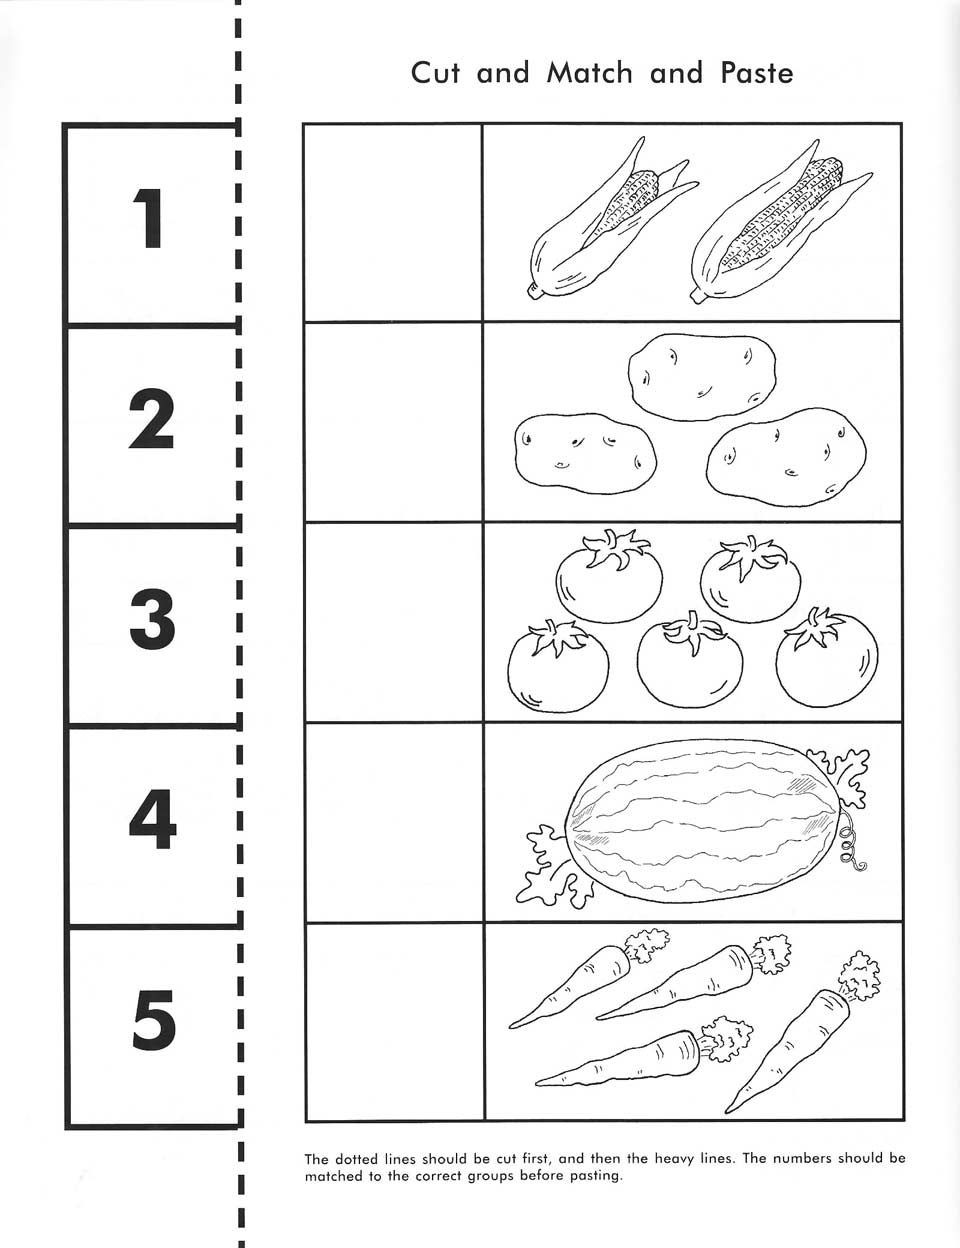 Cut and Paste Worksheets Kindergarten Rod &amp; Staff Preschool Workbooks